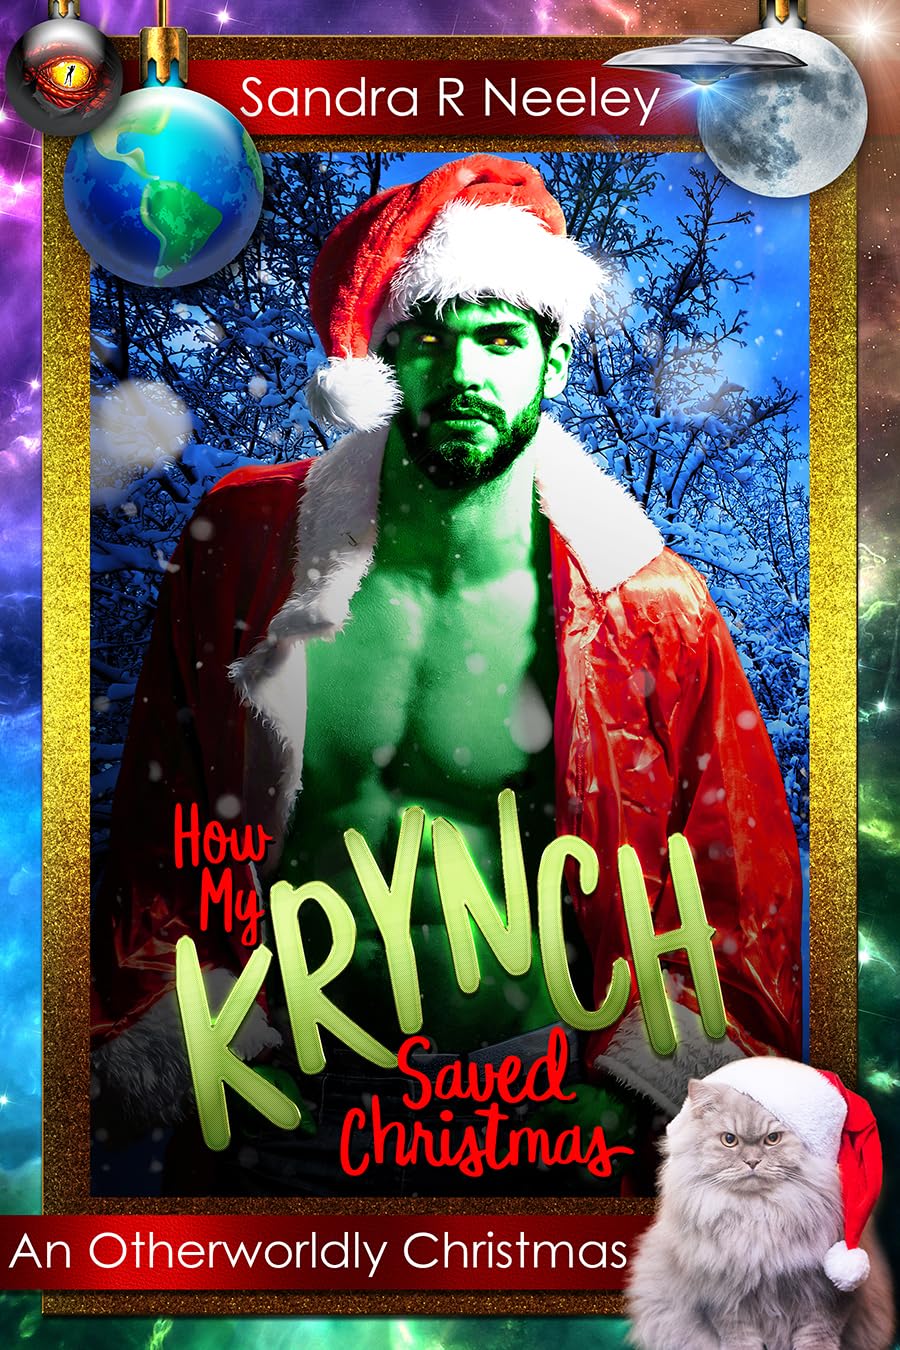 How My Krynch Saved Christmas by Sandra R Neeley